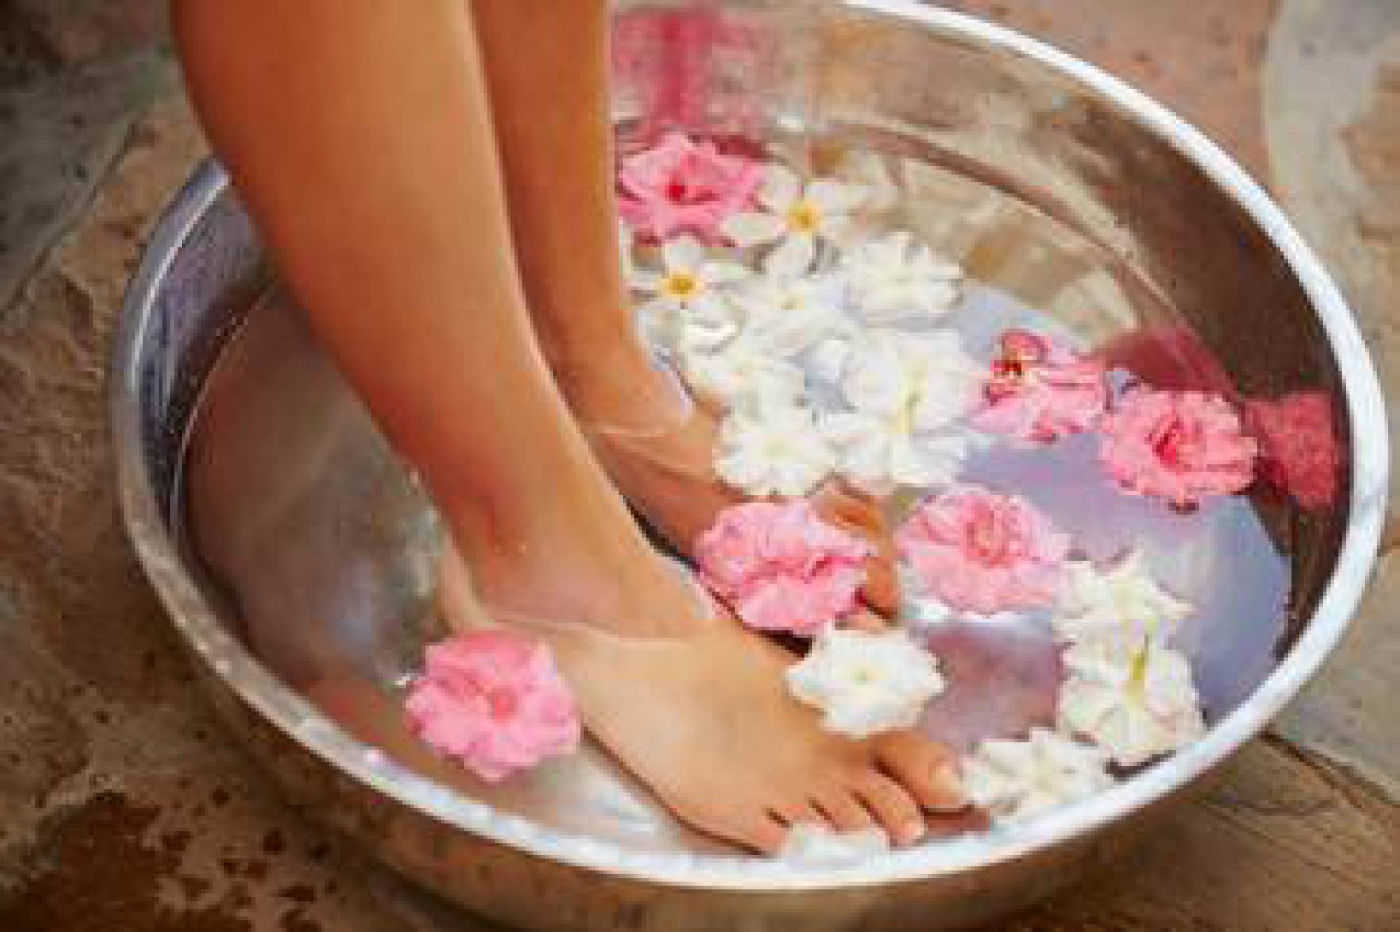 Woman soaking feet